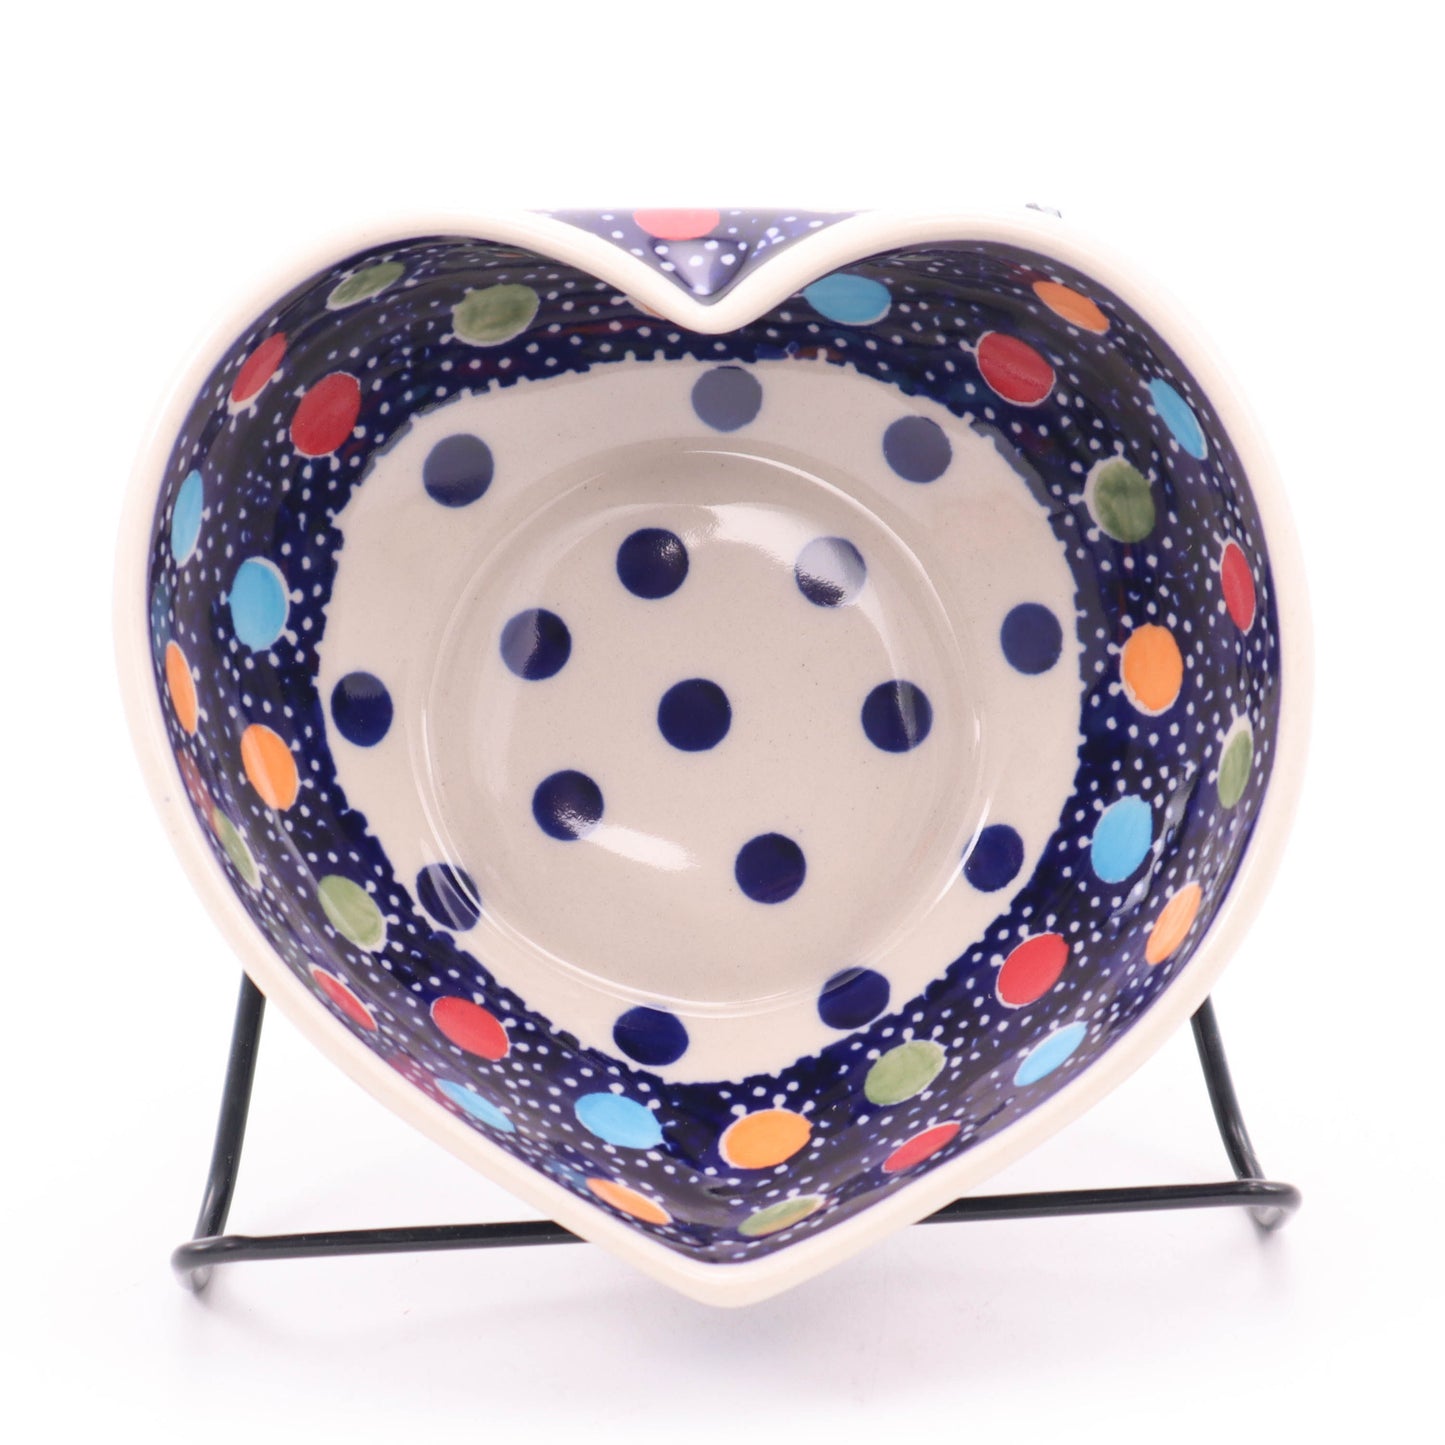 5"x6" Heart Bowl. Pattern: Gumball